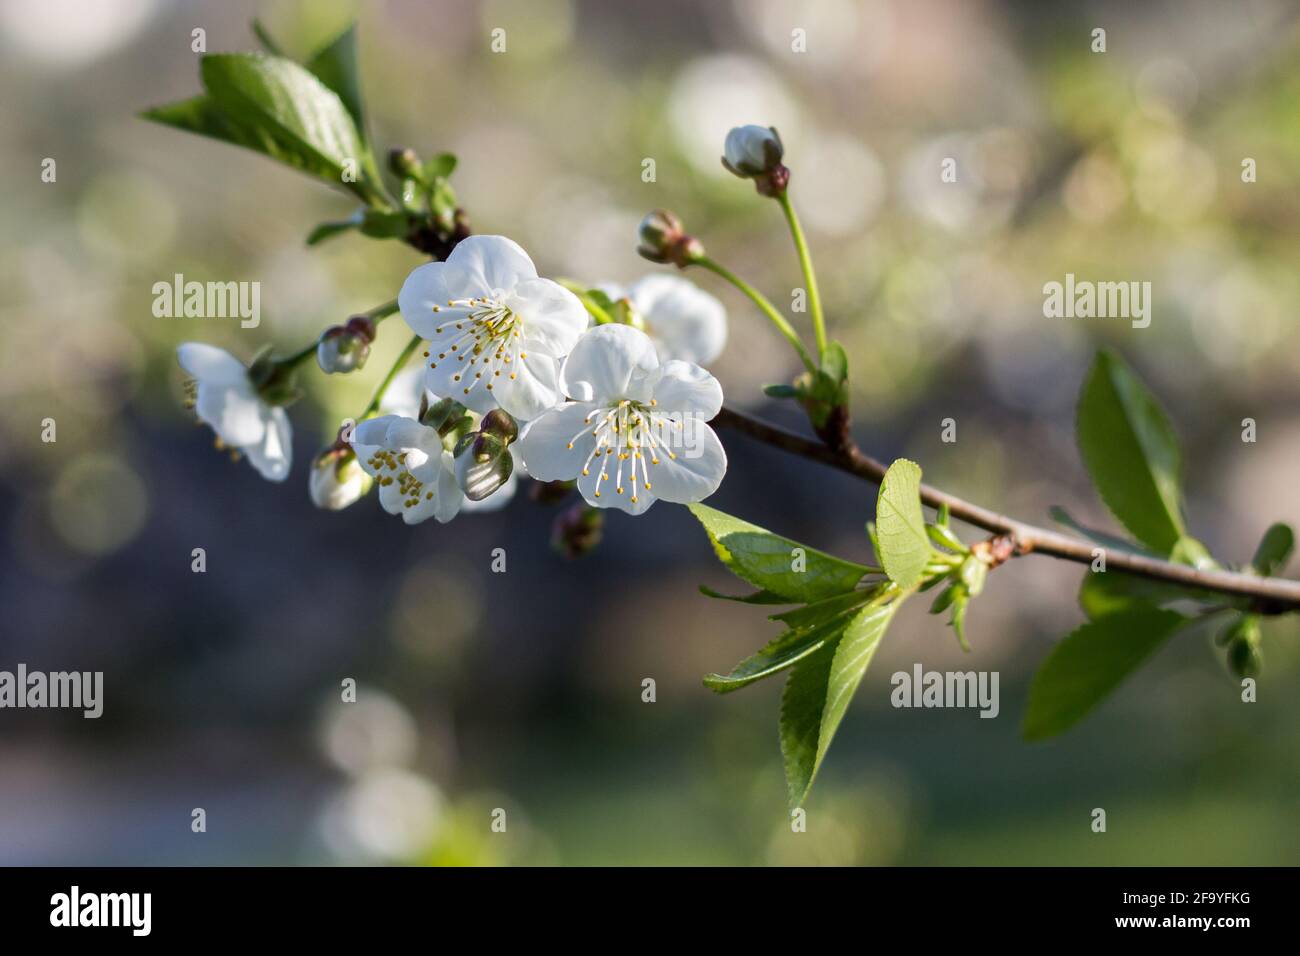 Blooming black cherry tree in the garden. Stock Photo